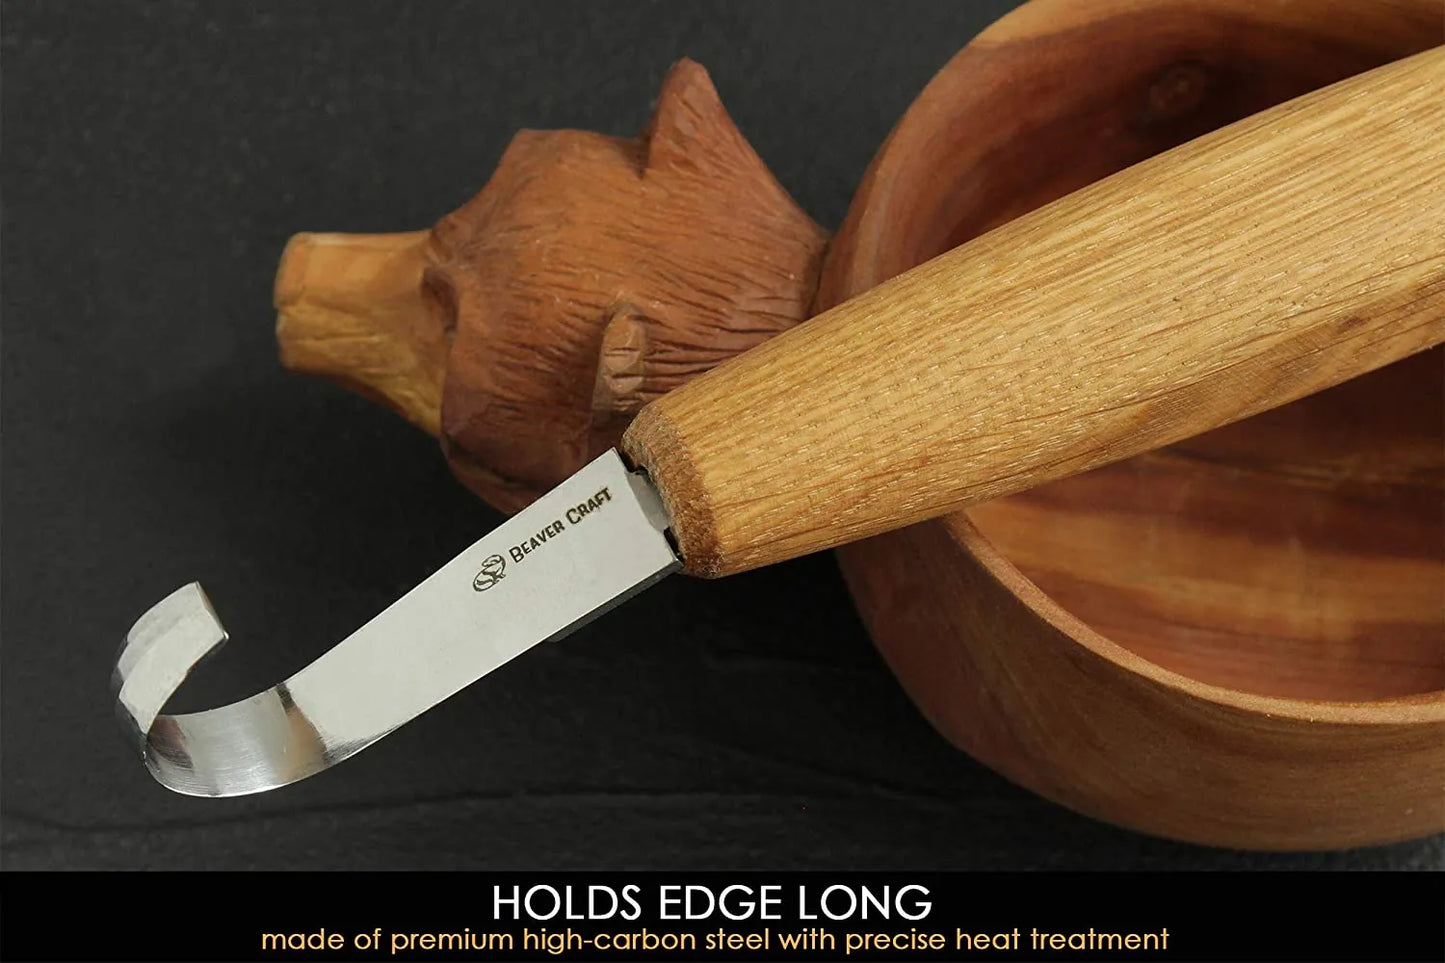 BeaverCraft SK5R - Spoon Carving Knife Deep Cut Bevels Right side edge